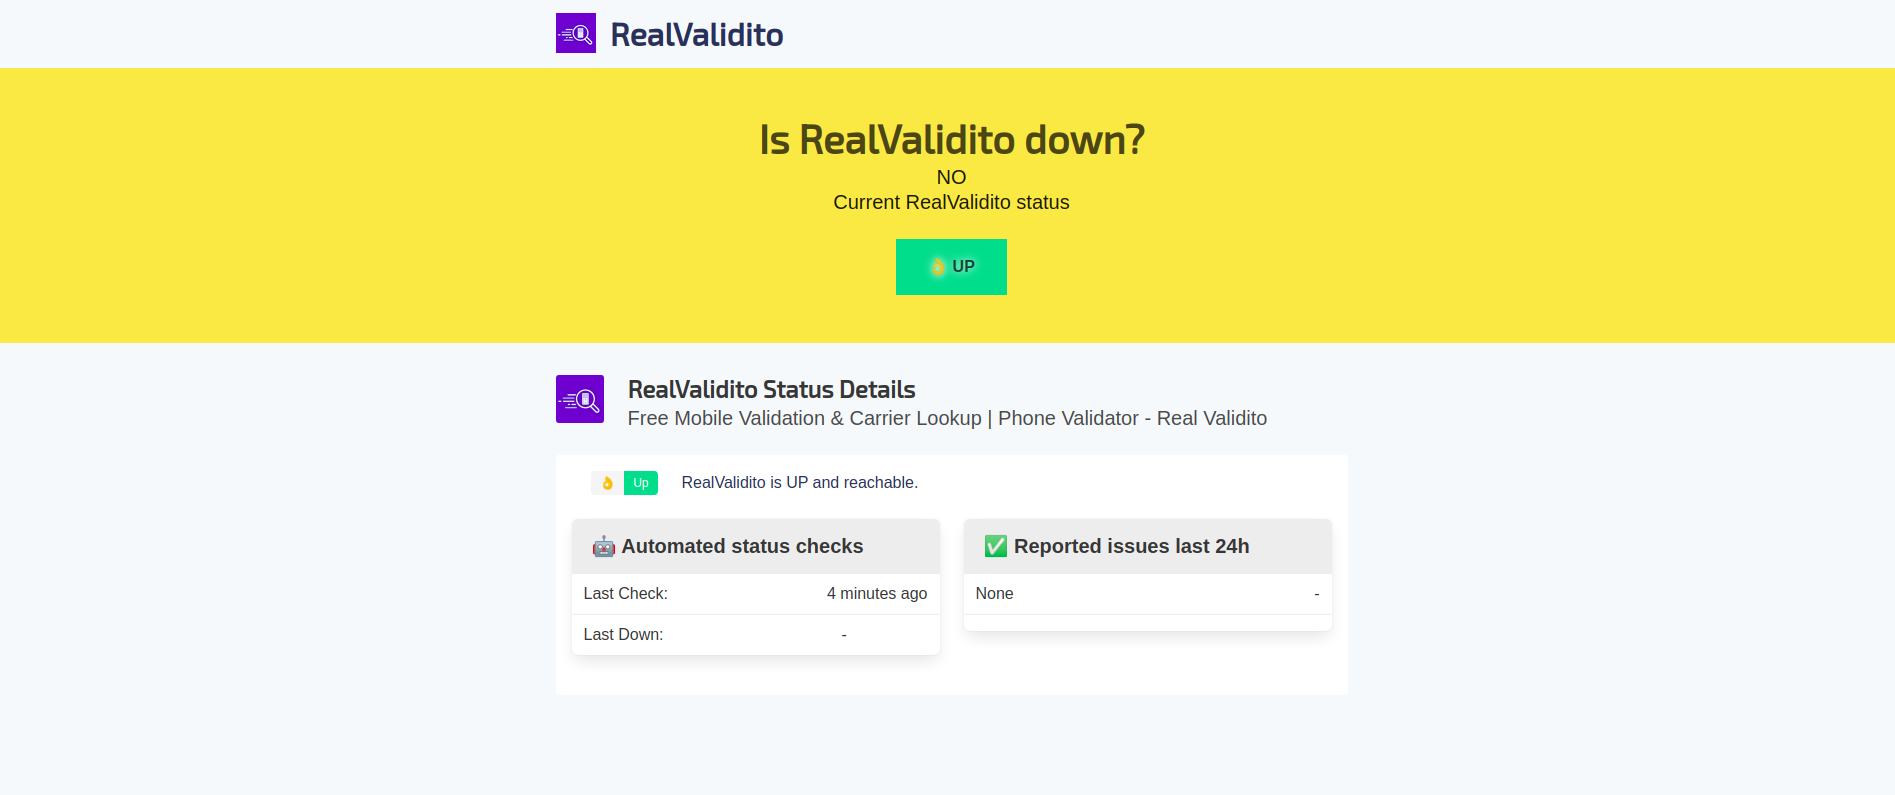 RealValidito Status Details